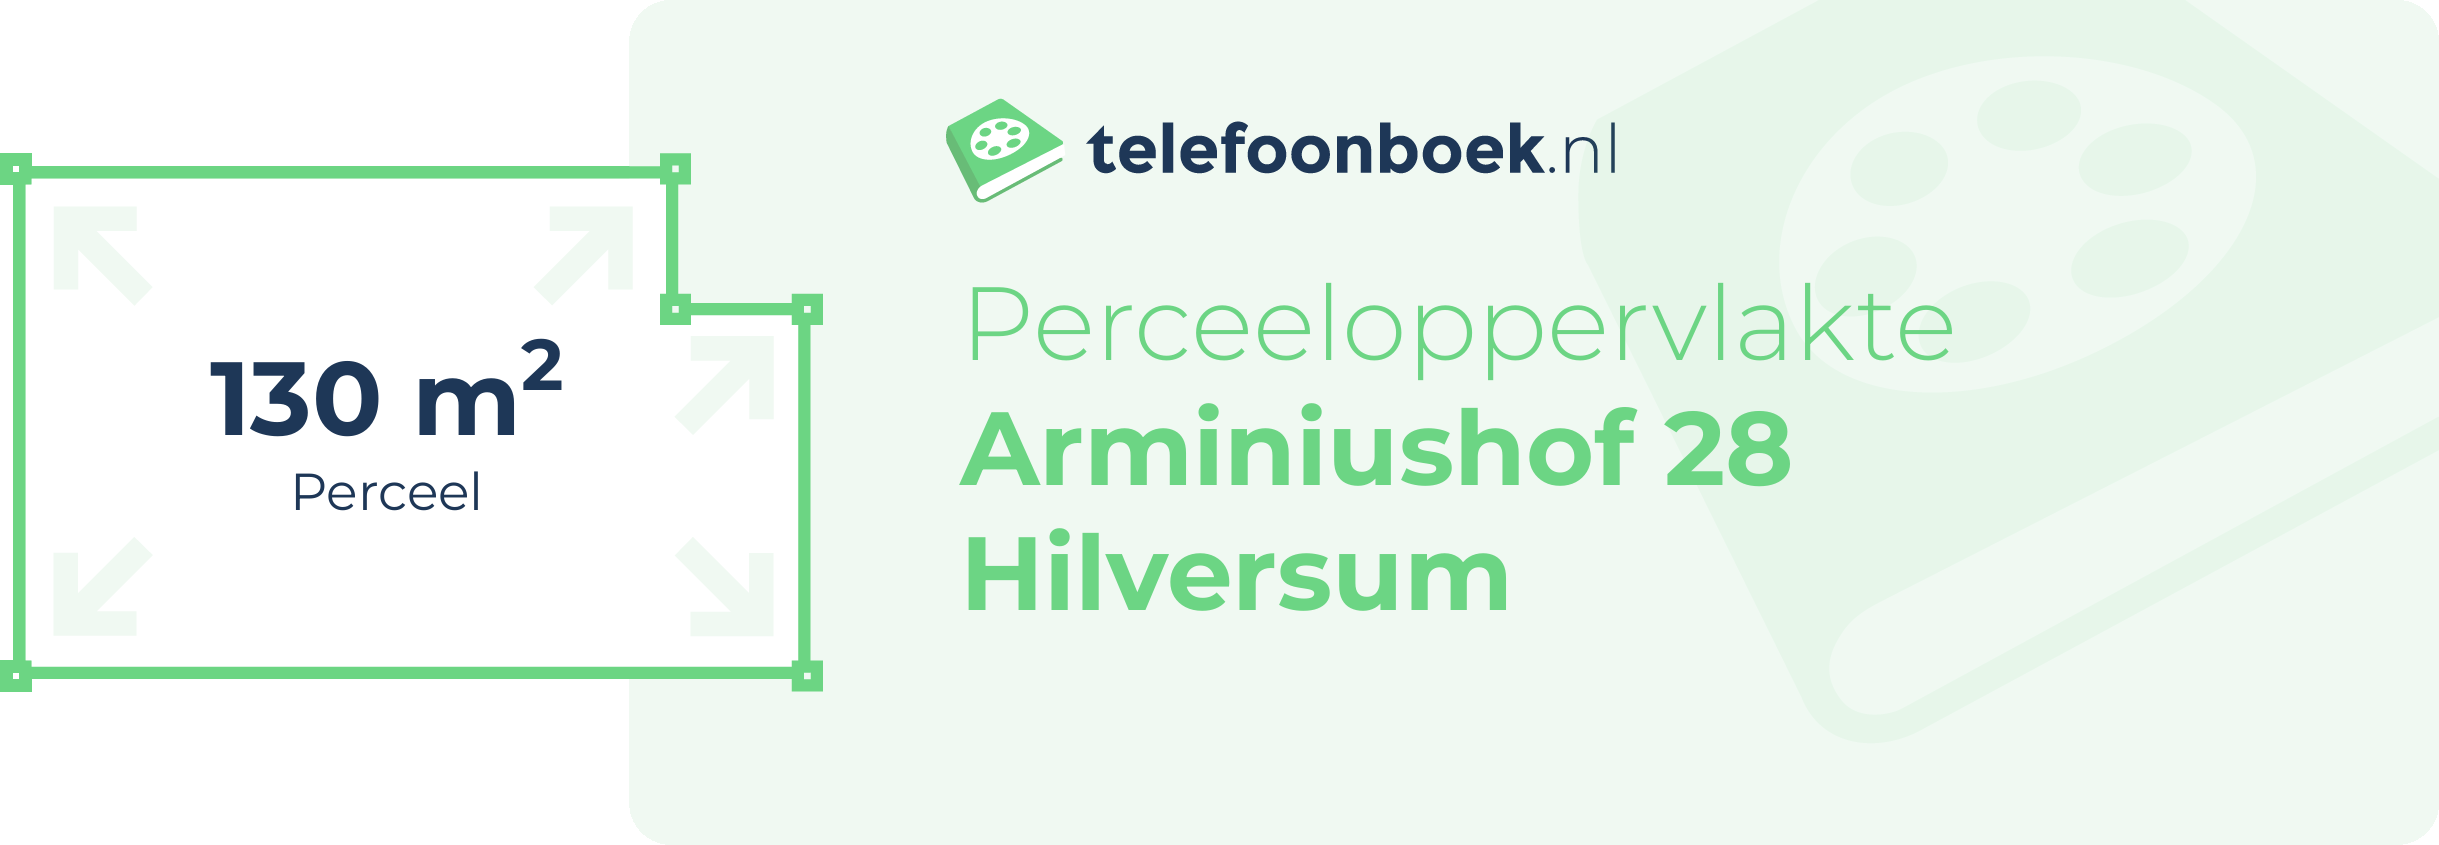 Perceeloppervlakte Arminiushof 28 Hilversum